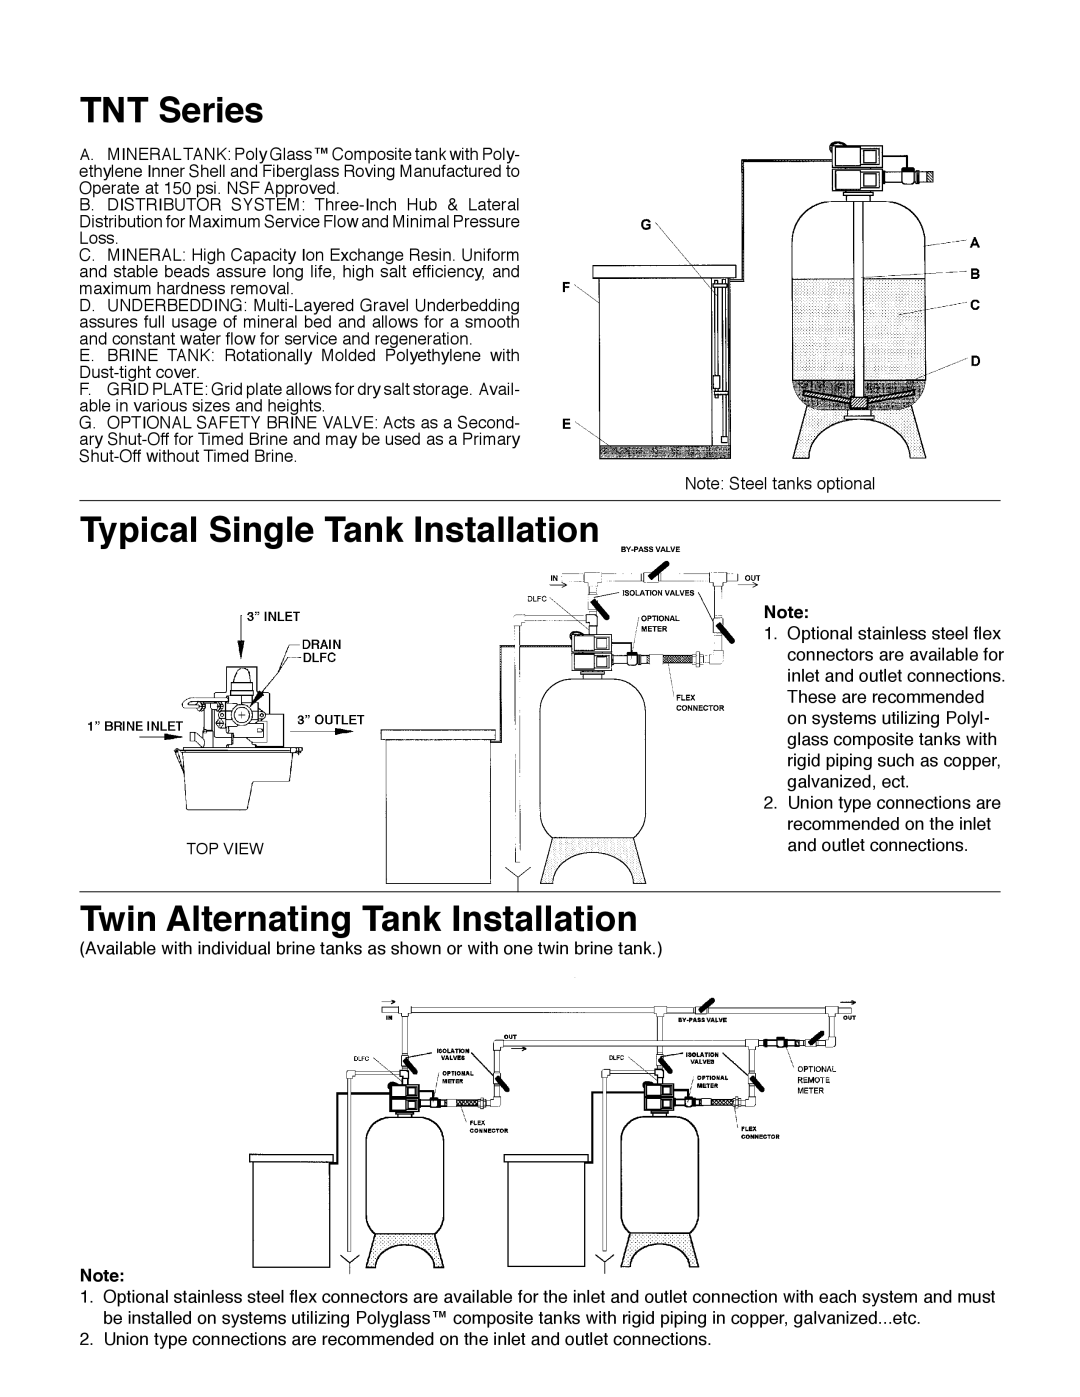 Hellenbrand TNT Series manual Typical Single Tank Installation, Twin Alternating Tank Installation 